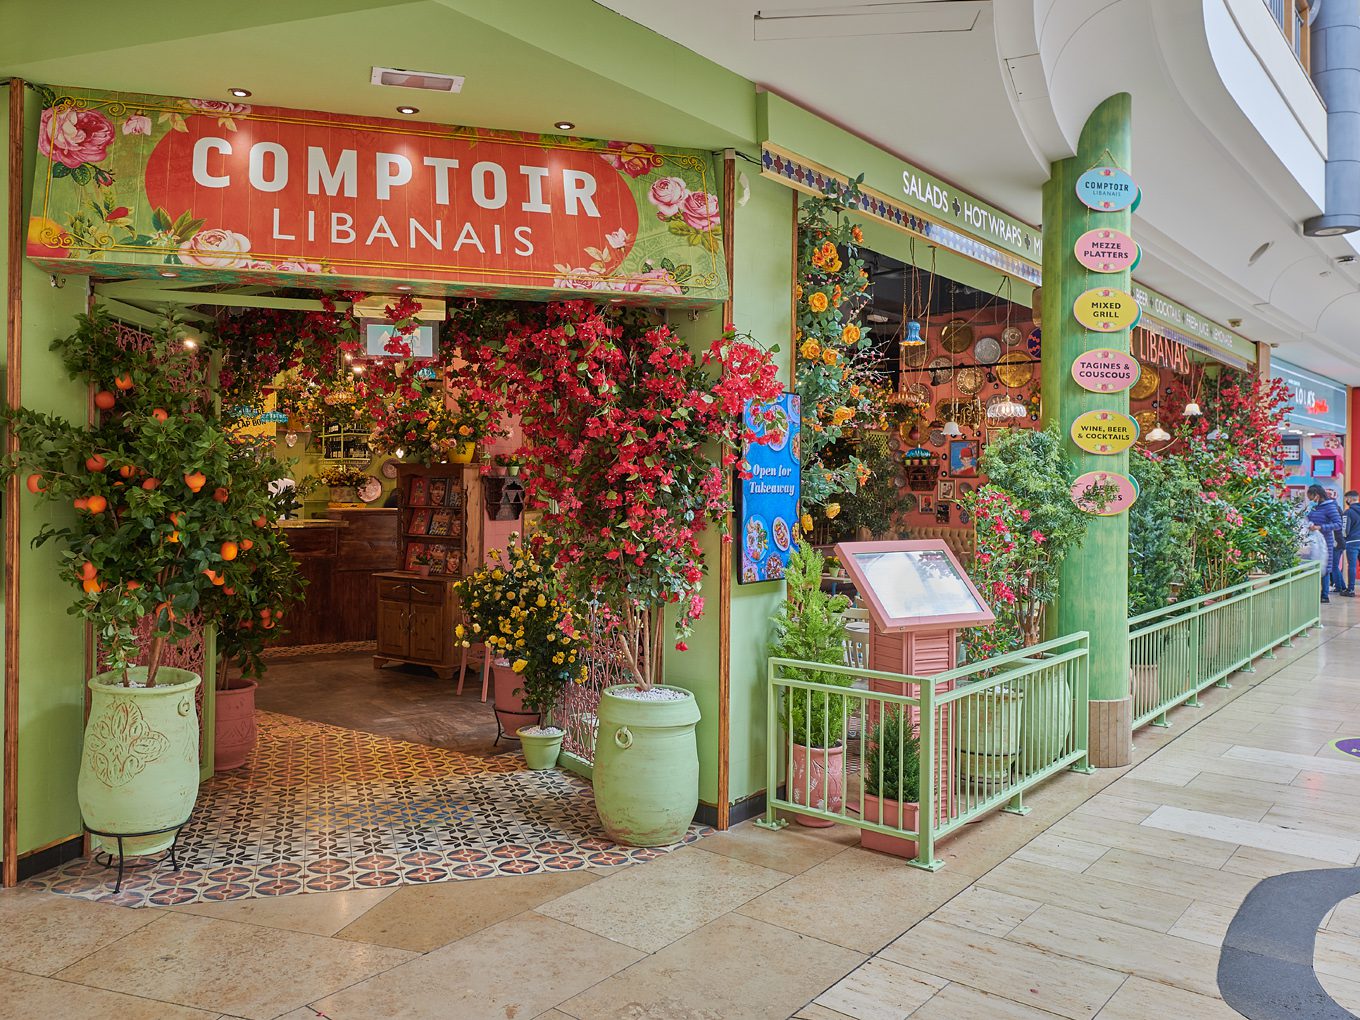 restaurant comptoir libanais entrance with flowers